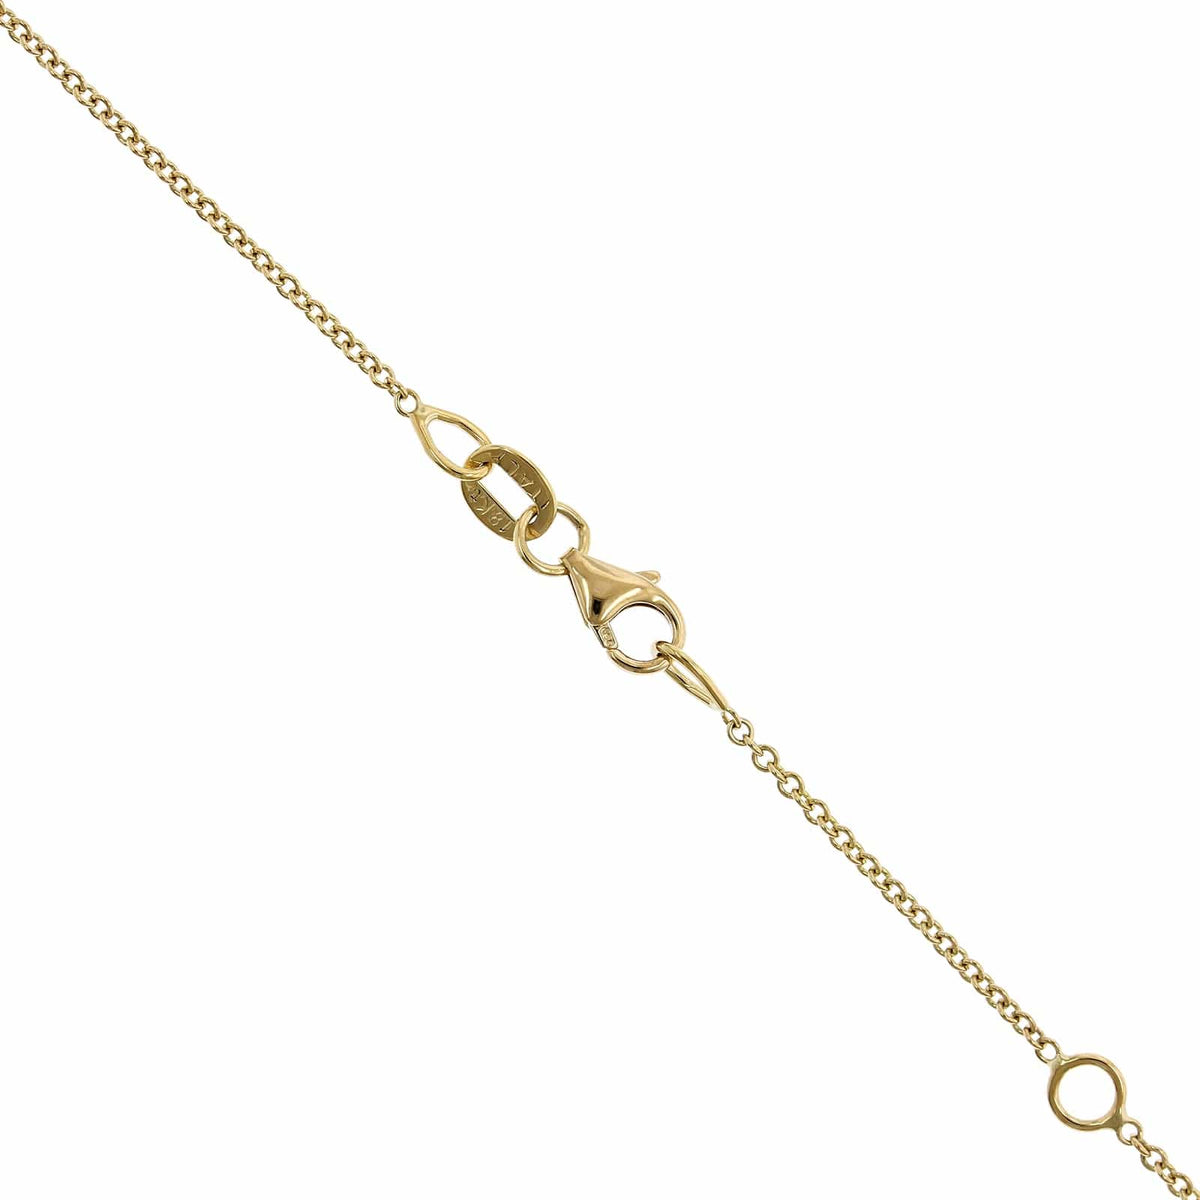 18K Yellow Gold Curve Bar Diamond Necklace